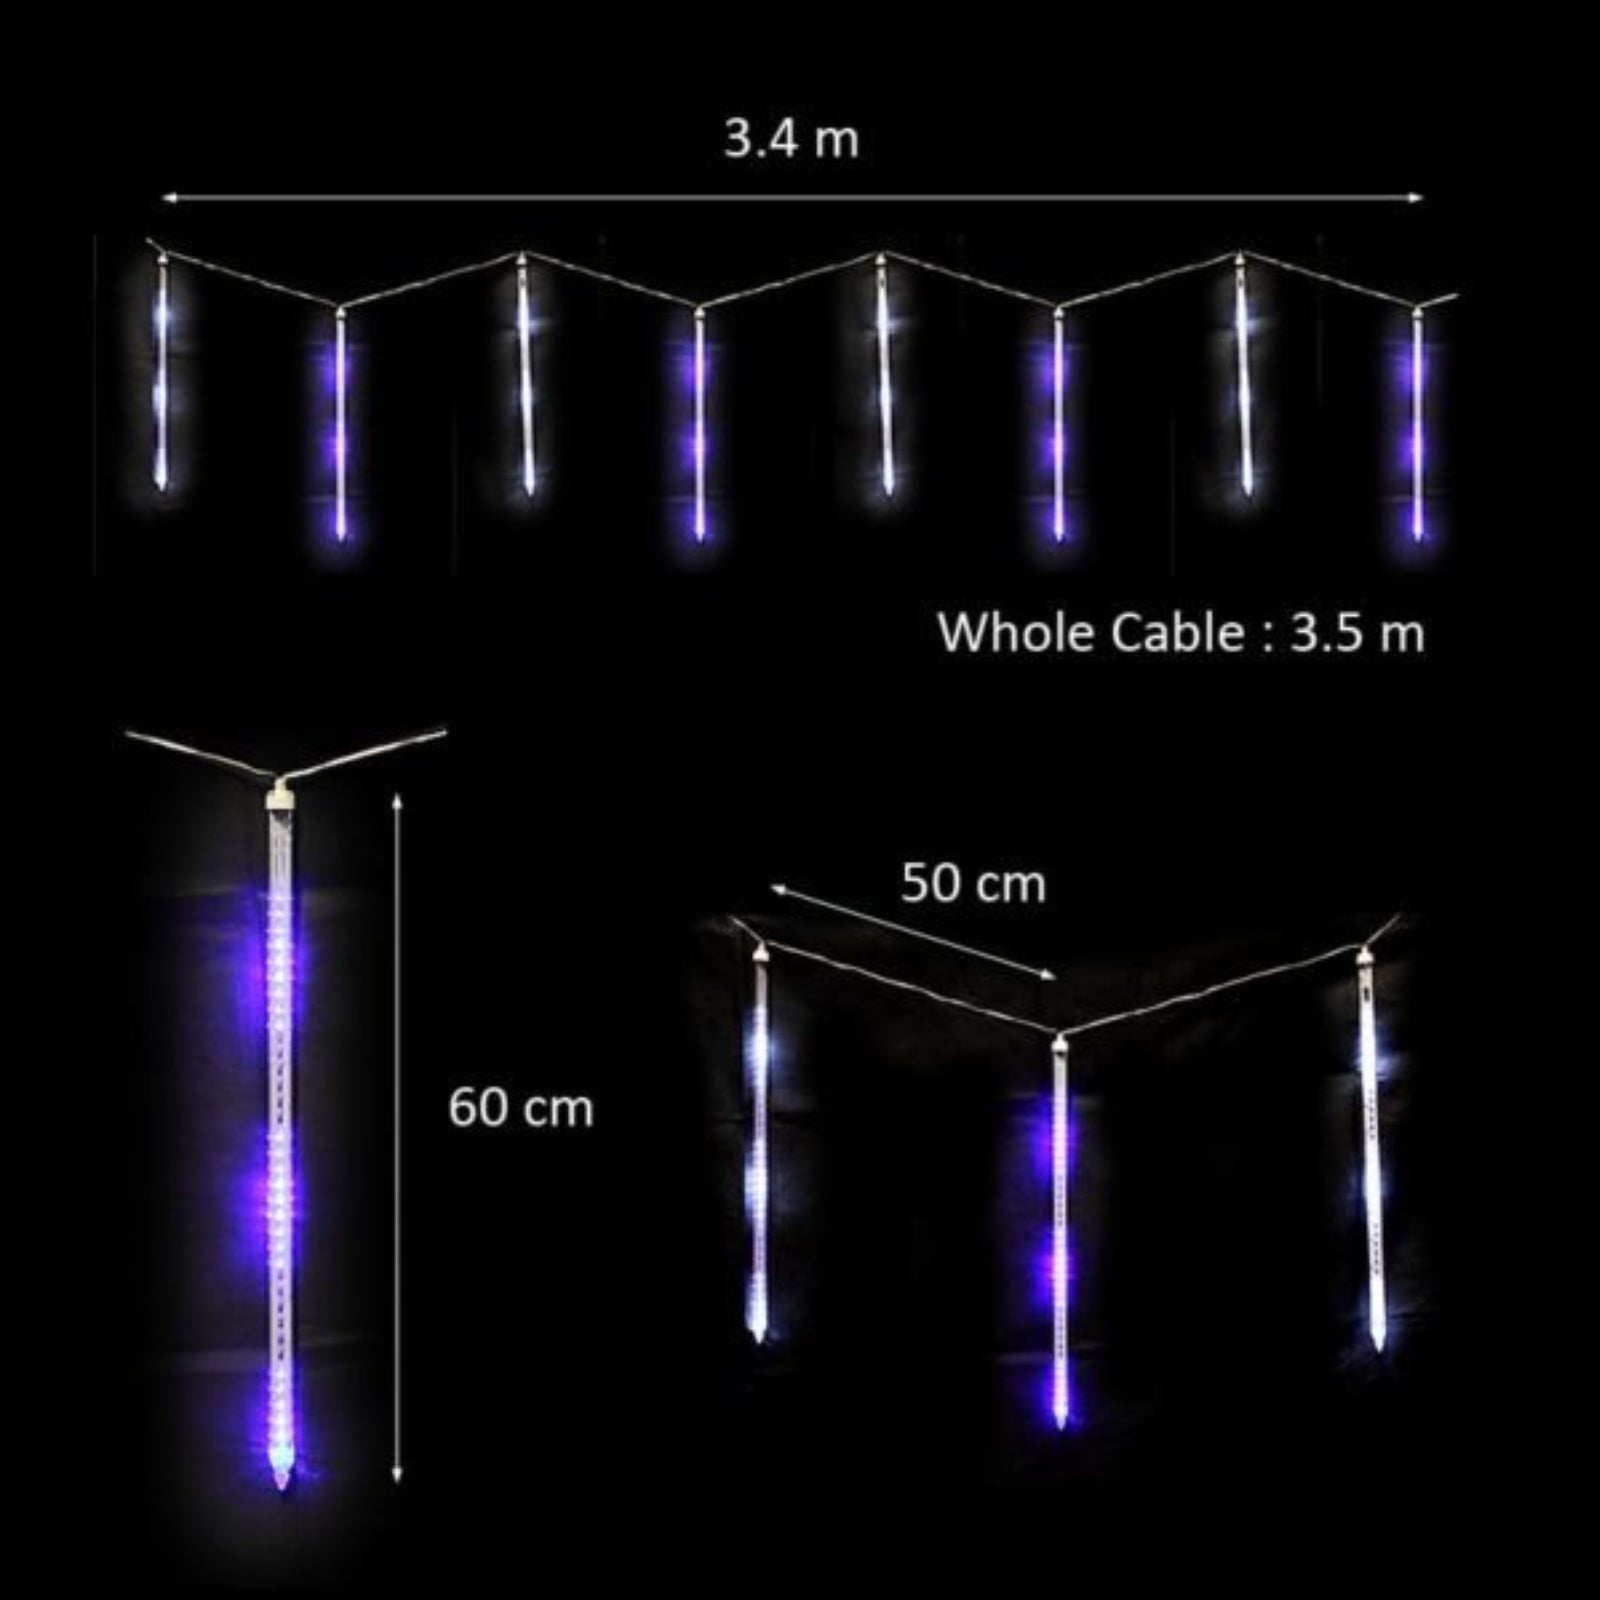 3.4M Cable 8pcs Meteor Shower Lights Tubes Flickering Meteor outdoor Light Set - Homeware Discounts